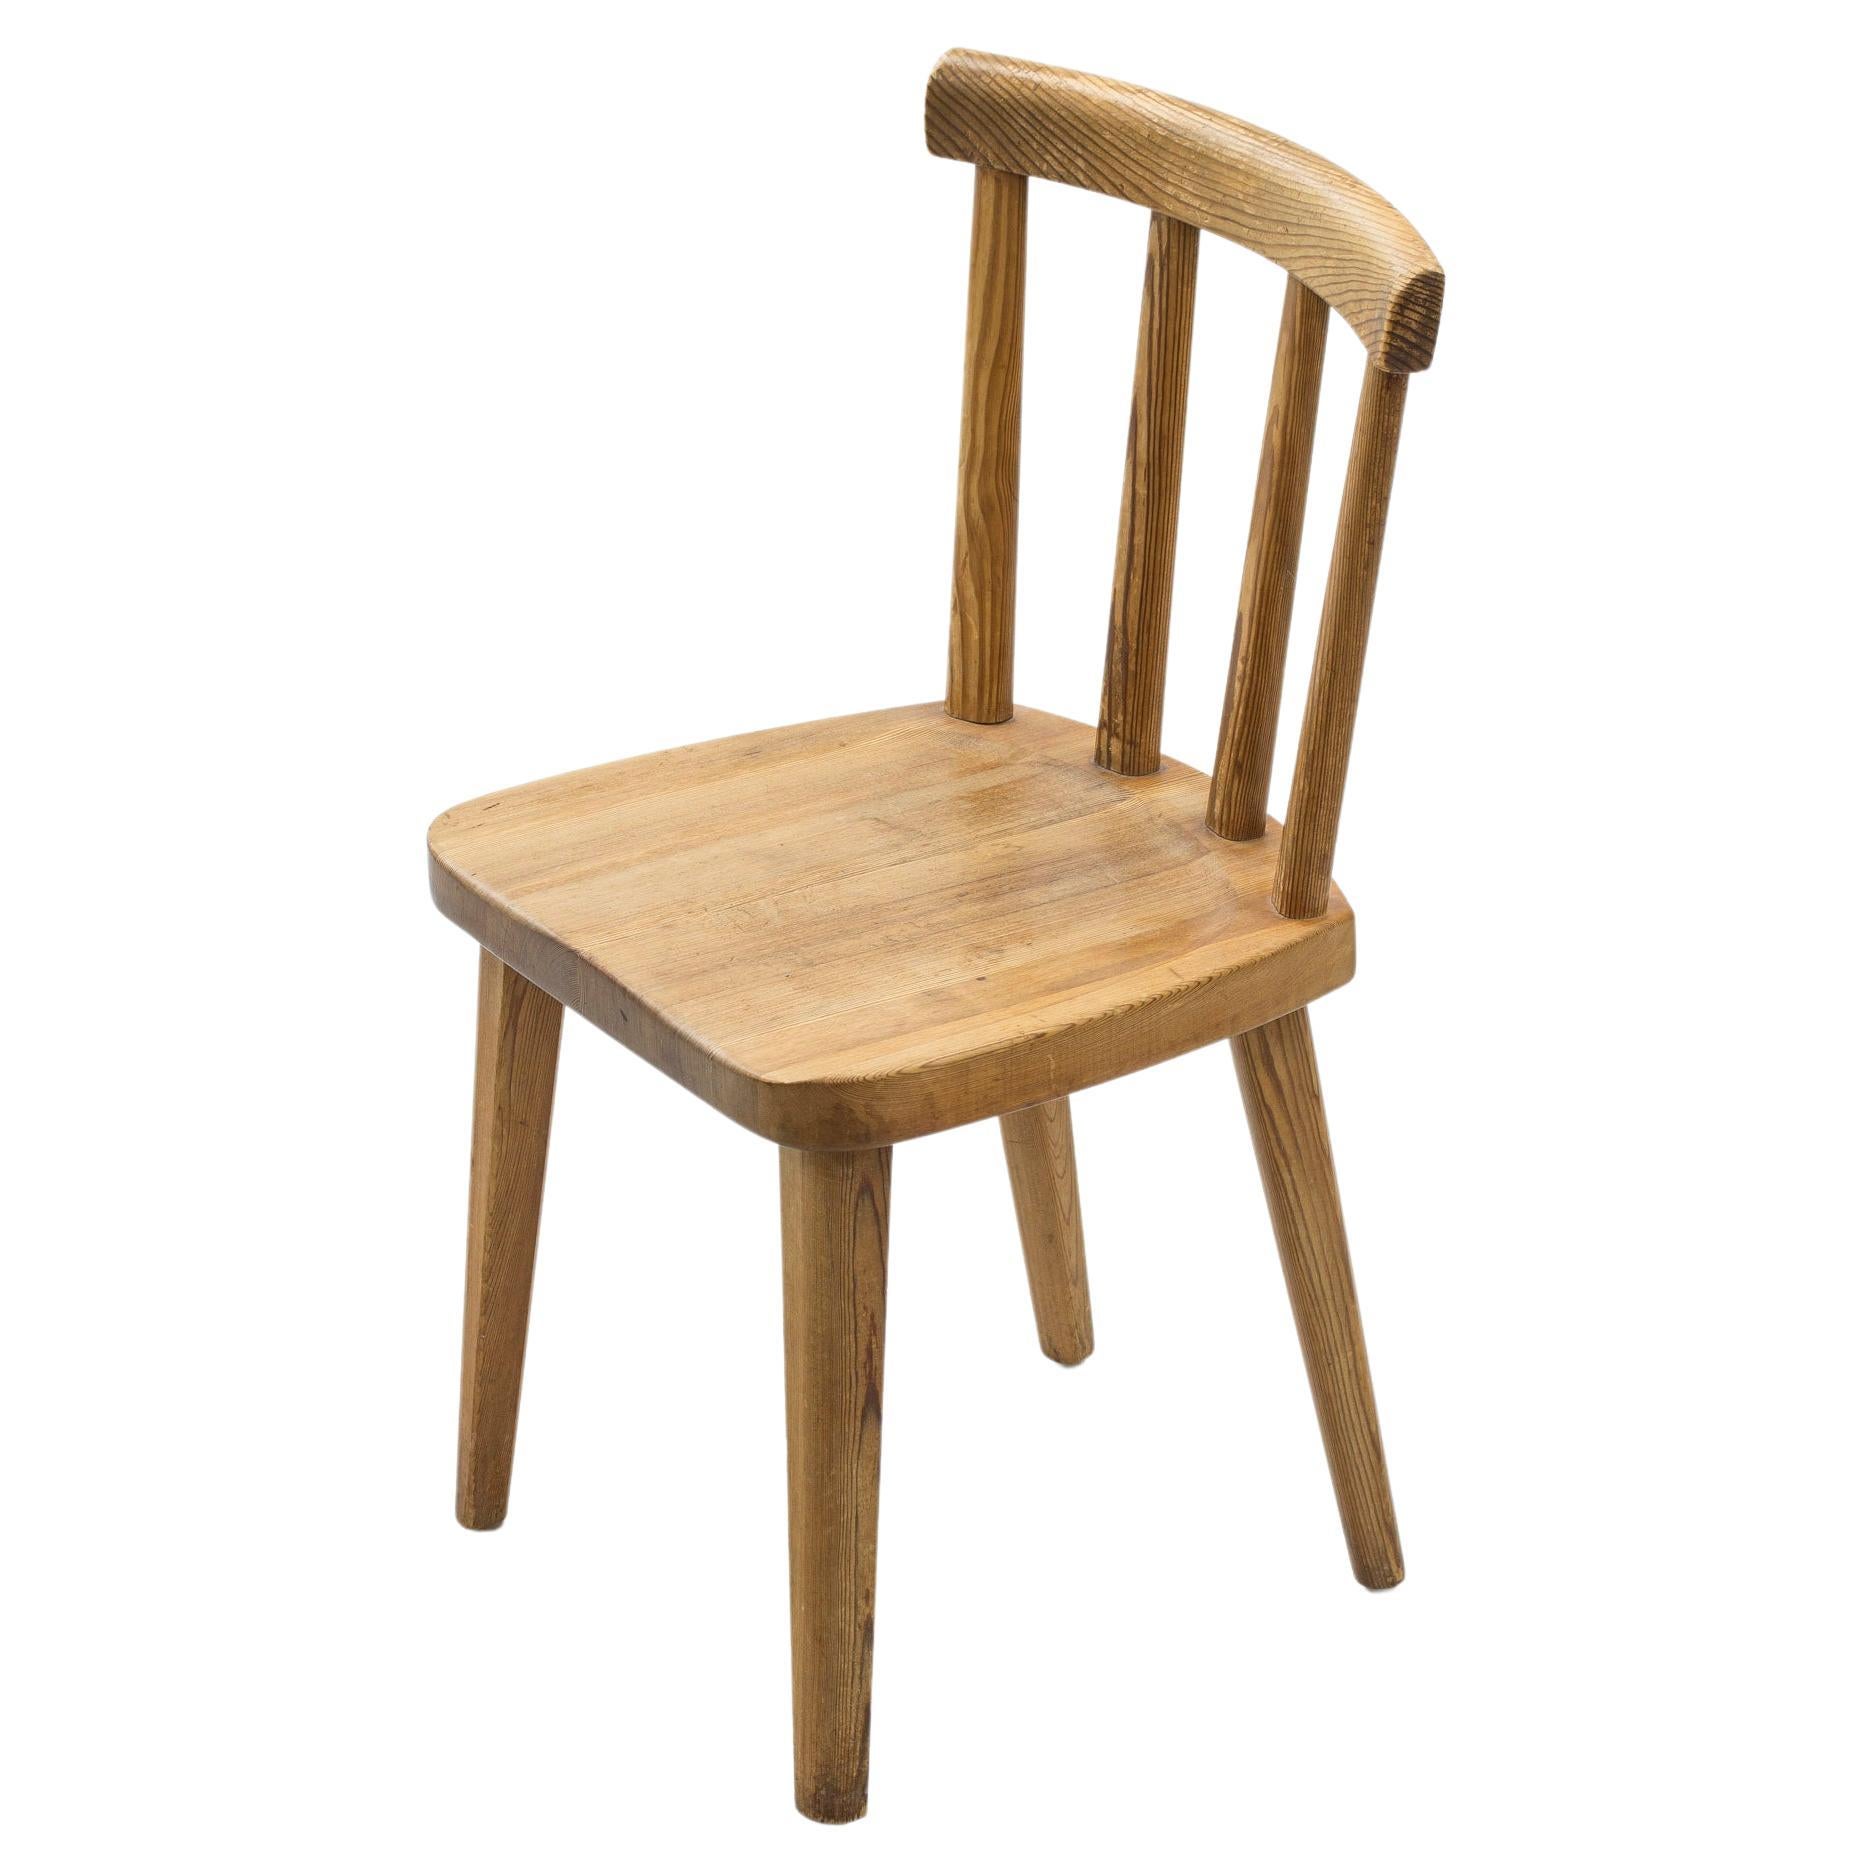 Utö pine chair by Axel Einar Hjorth, Nordiska Kompaniet, Sportstugemöbel, 1930s